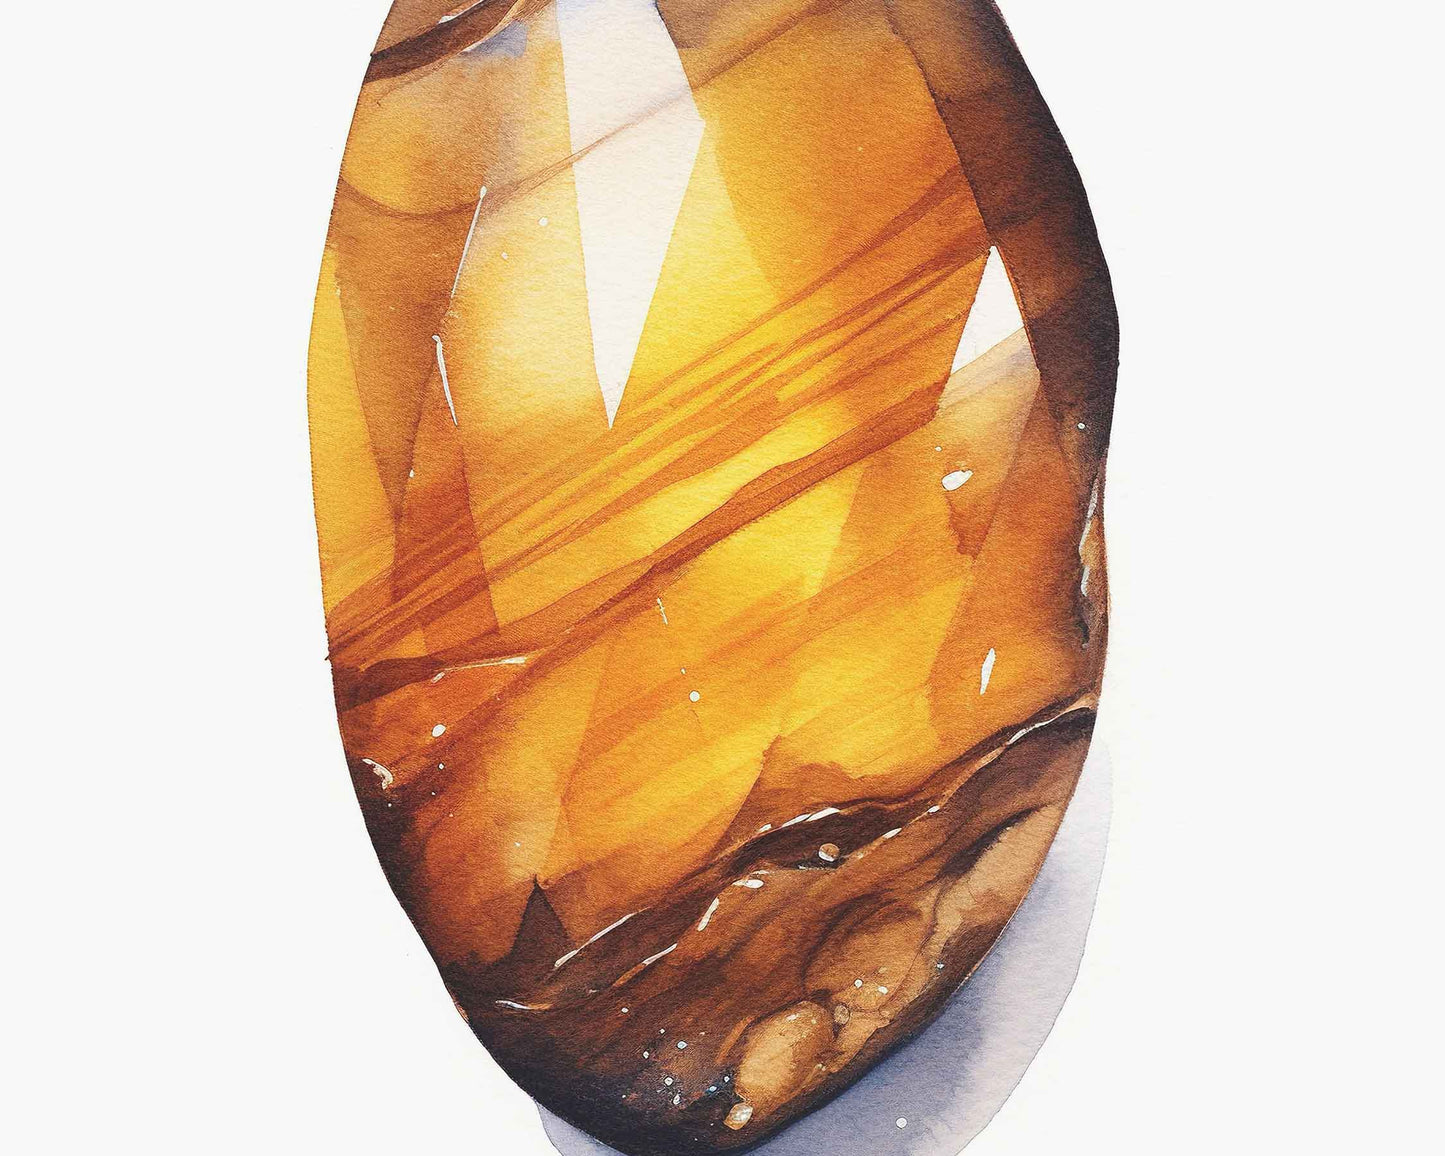 Framed Image of Tiger's Eye Gemstone Spiritual Manifestation Crystal Affirmations Wall Art Prints